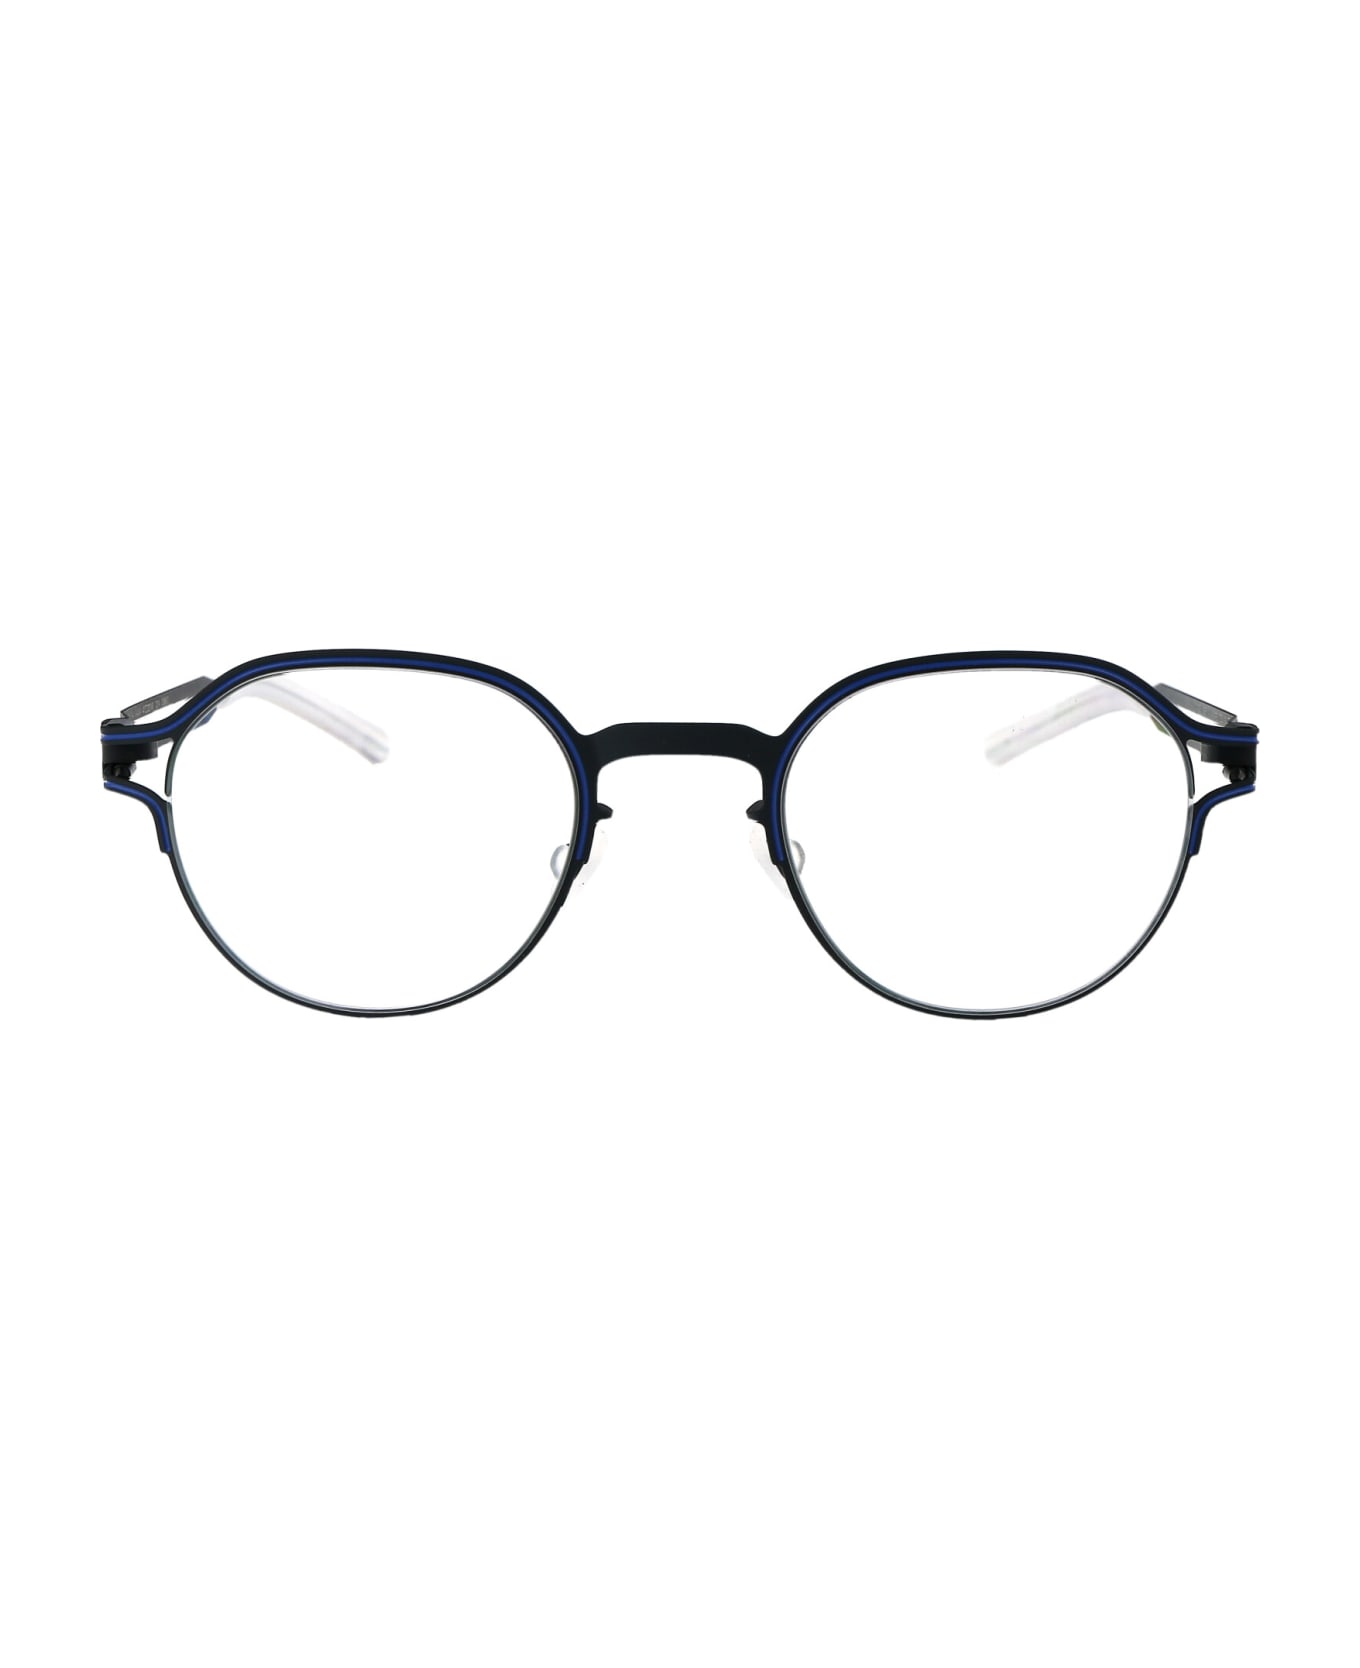 Mykita Vaasa Glasses - 514 Indigo/Yale Blue Clear アイウェア